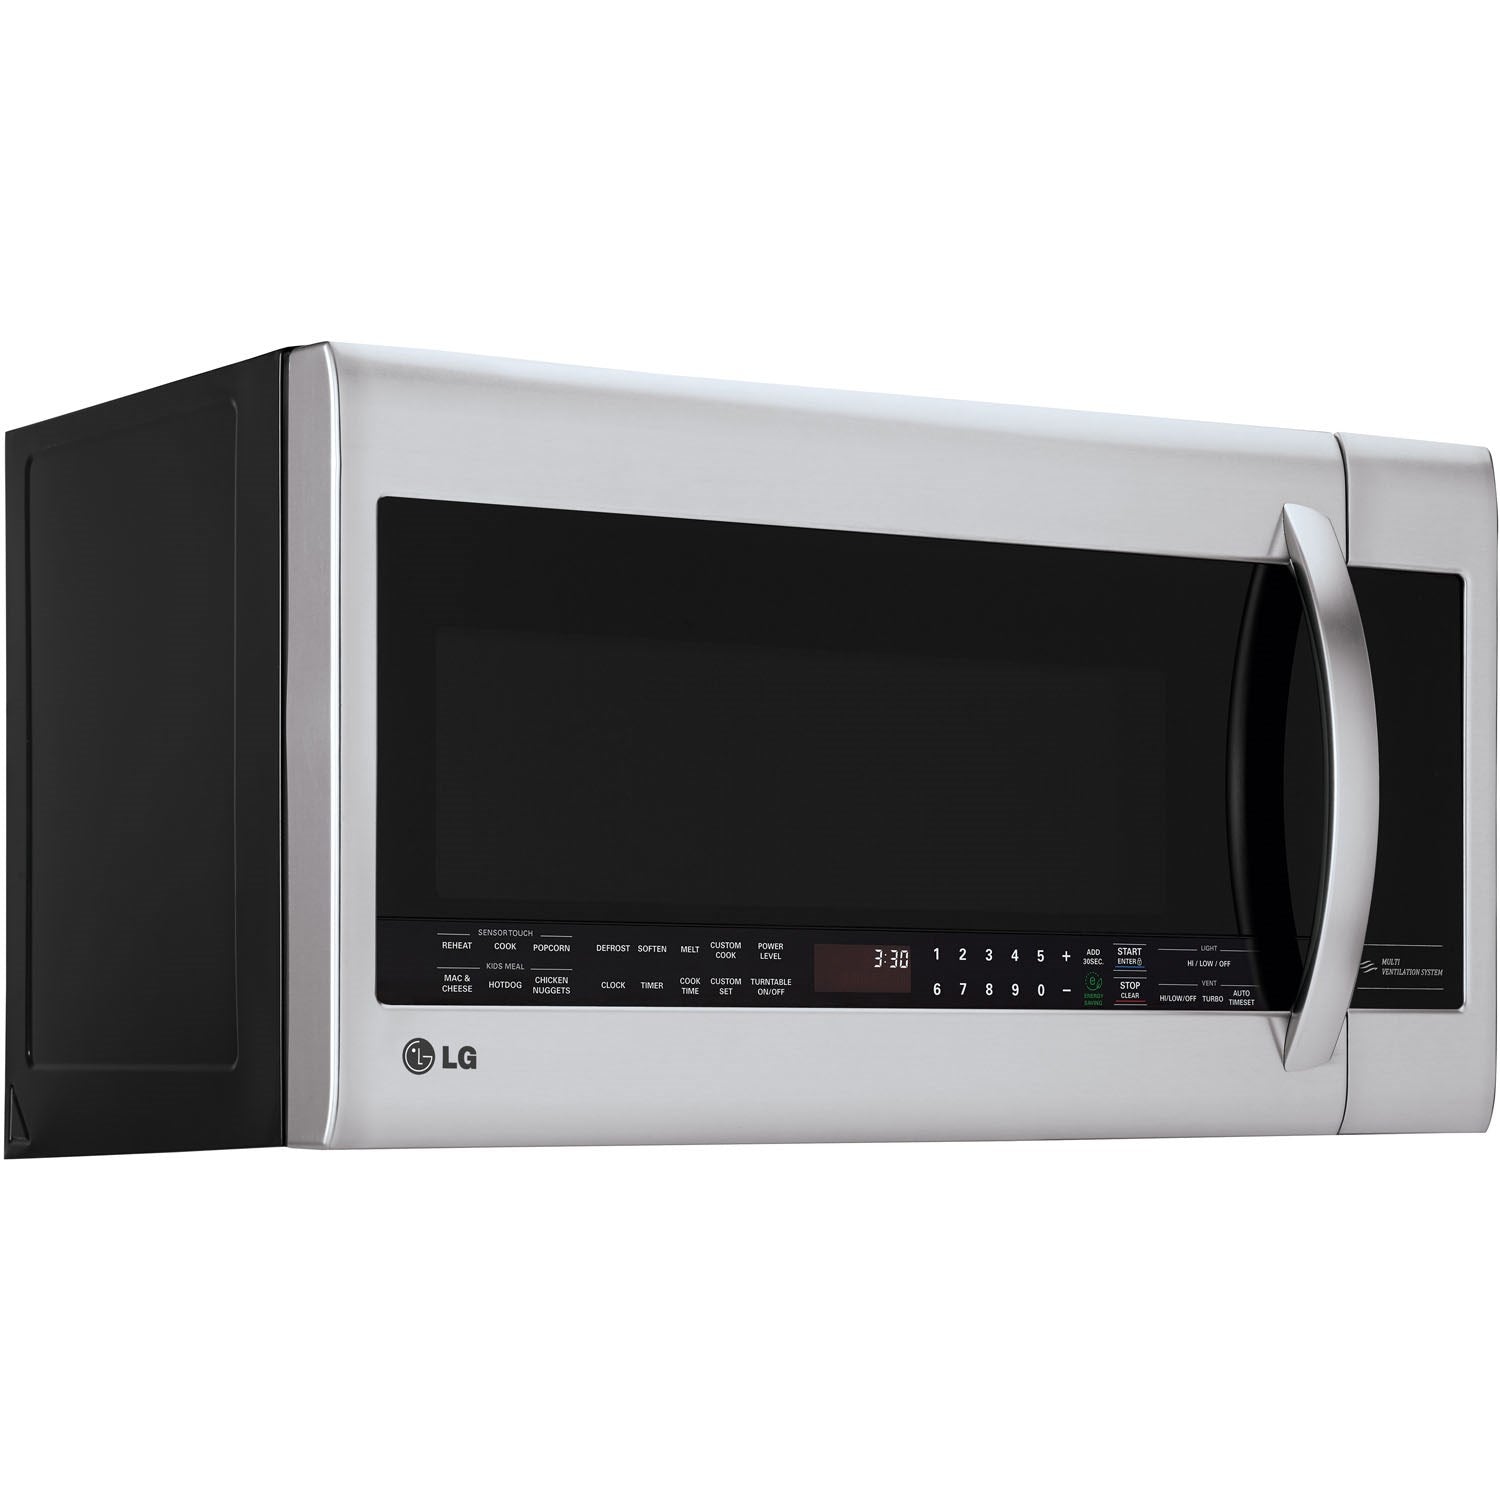 LG - 2.0 CF Over-the-Range Microwave and 5.8 CF Gas Single Oven Slide-In Range, EasyClean Plus Self Clean, ThinQ Bundle